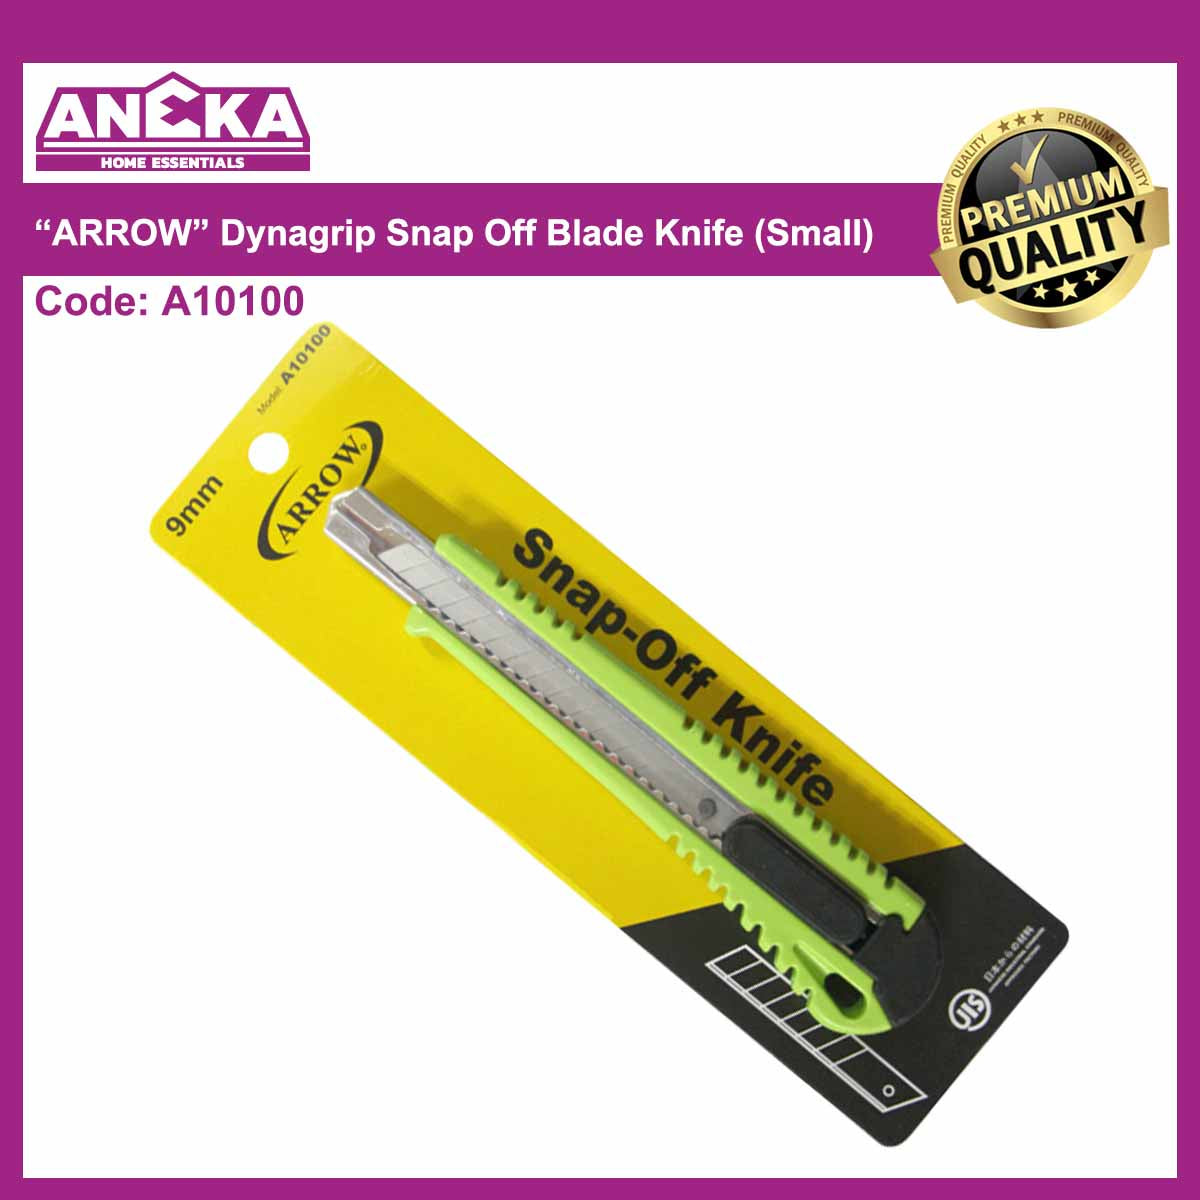 A10100 "Arrow" Dynagrip Snap Off Blade Knife 9mm